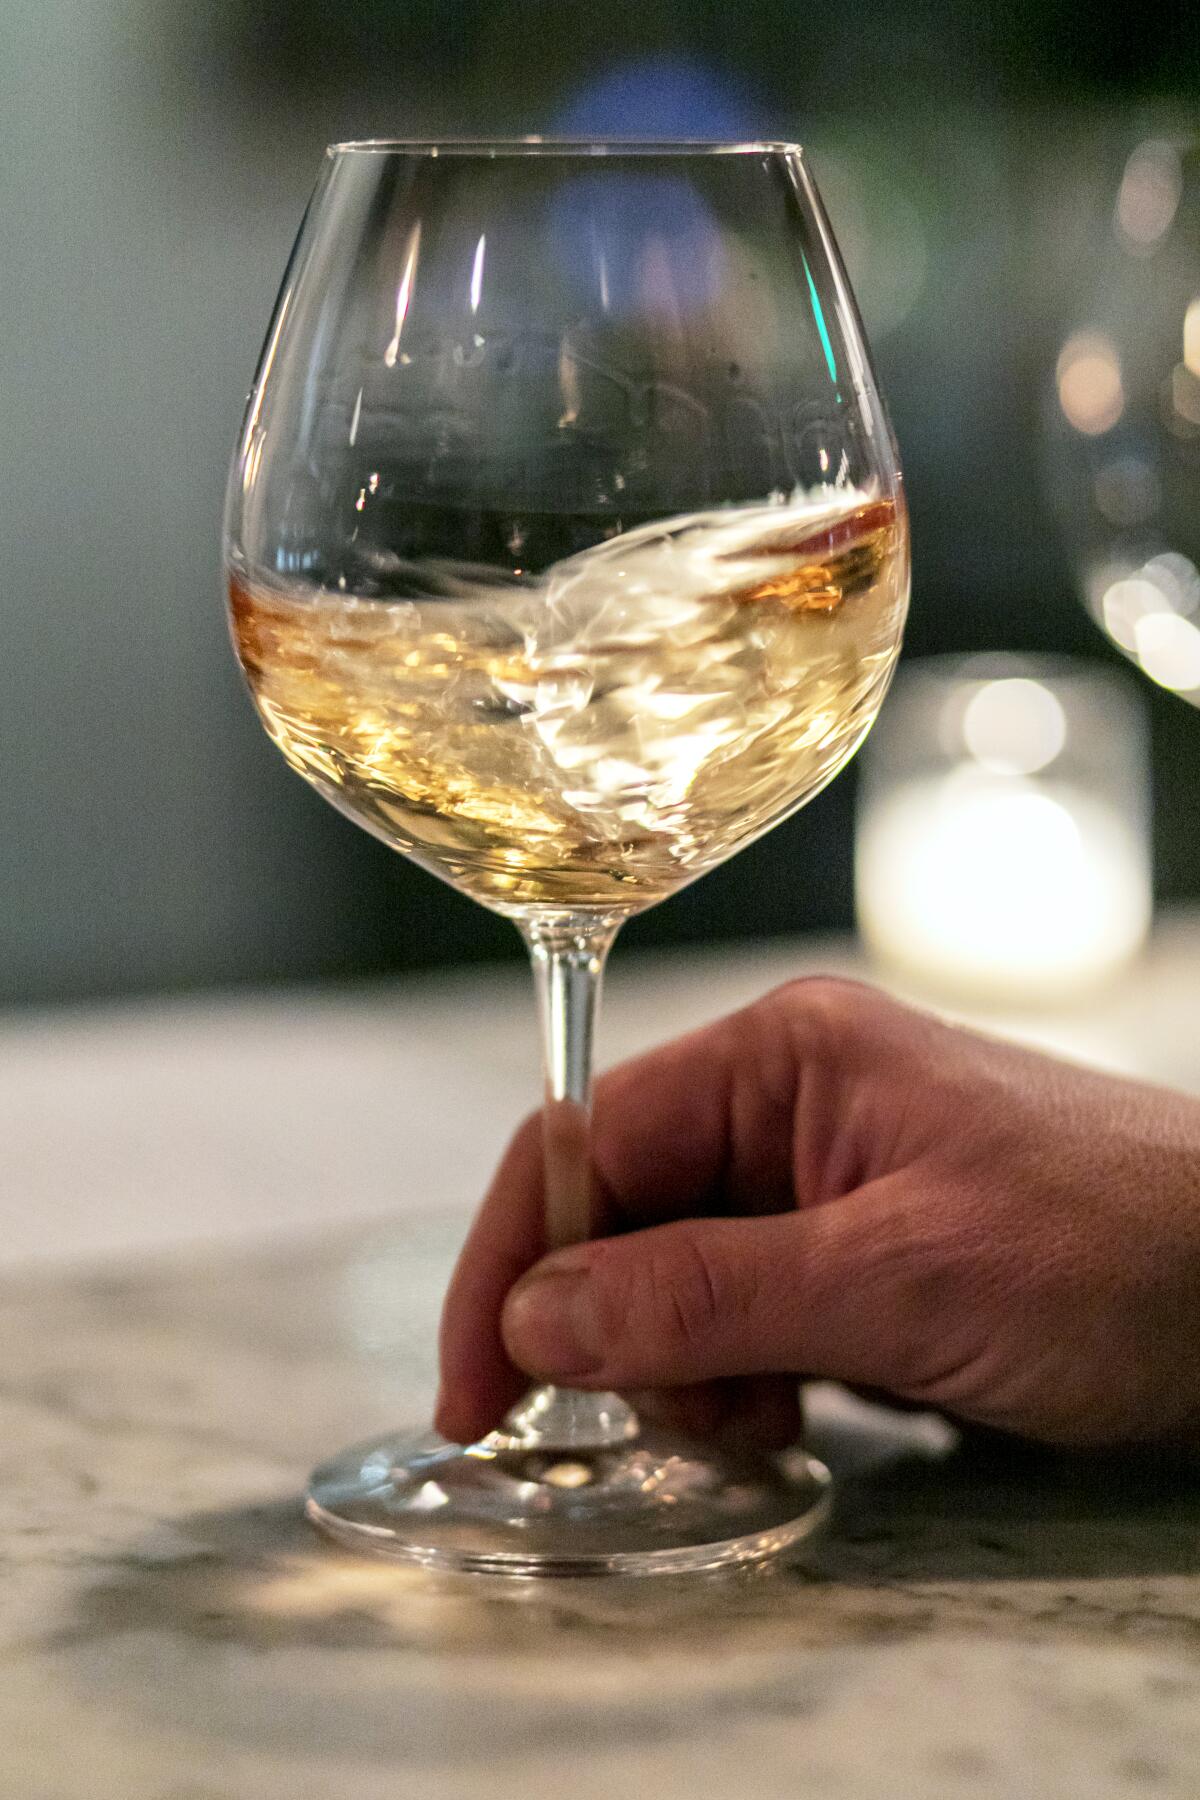 A person swirls wine in a wine glass 